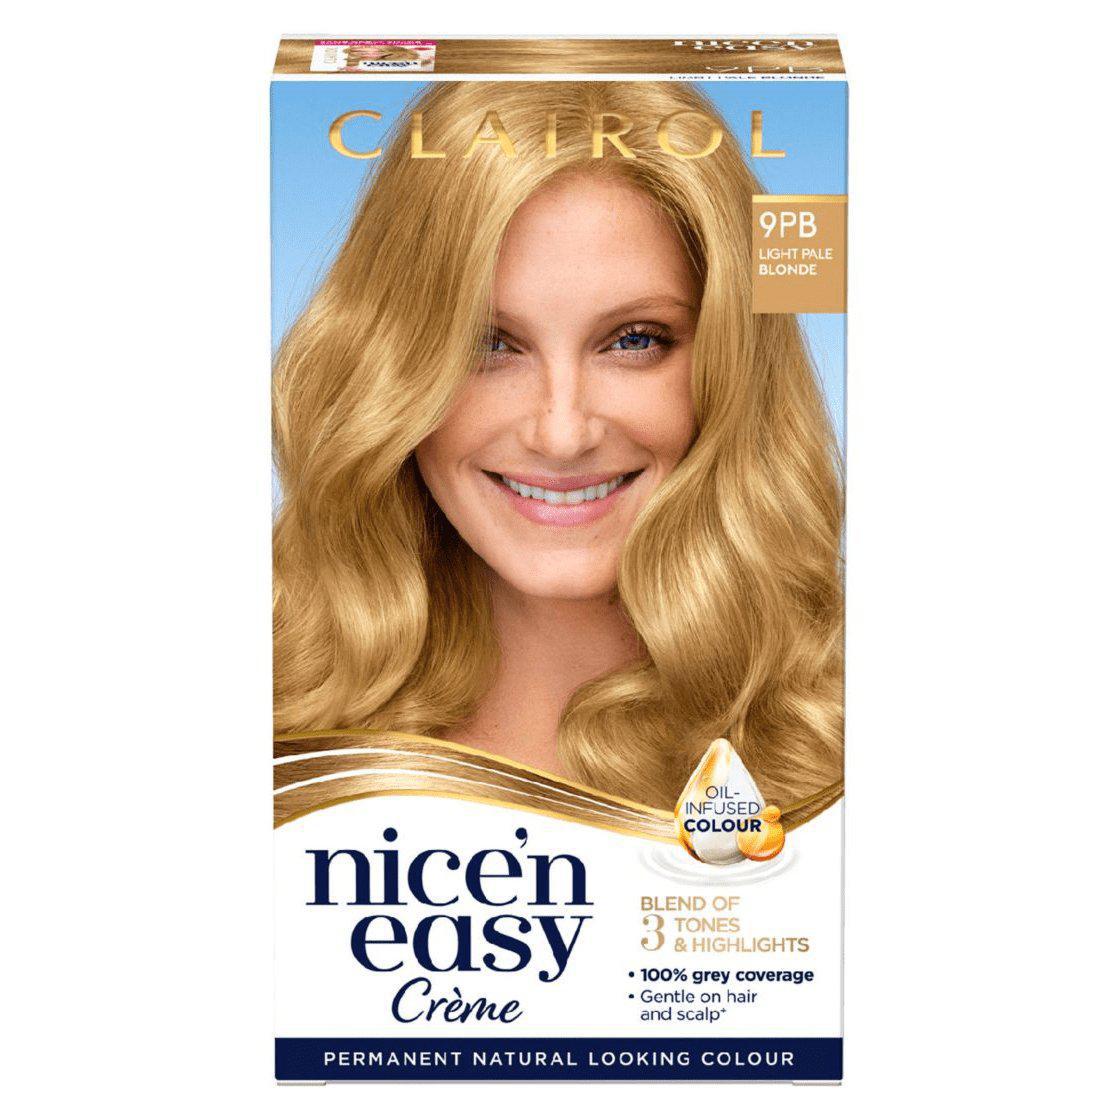 Clairol Nice N Easy Crème Natural Permanent Hair Dye - 9PB Light Pale Blonde - Healthxpress.ie